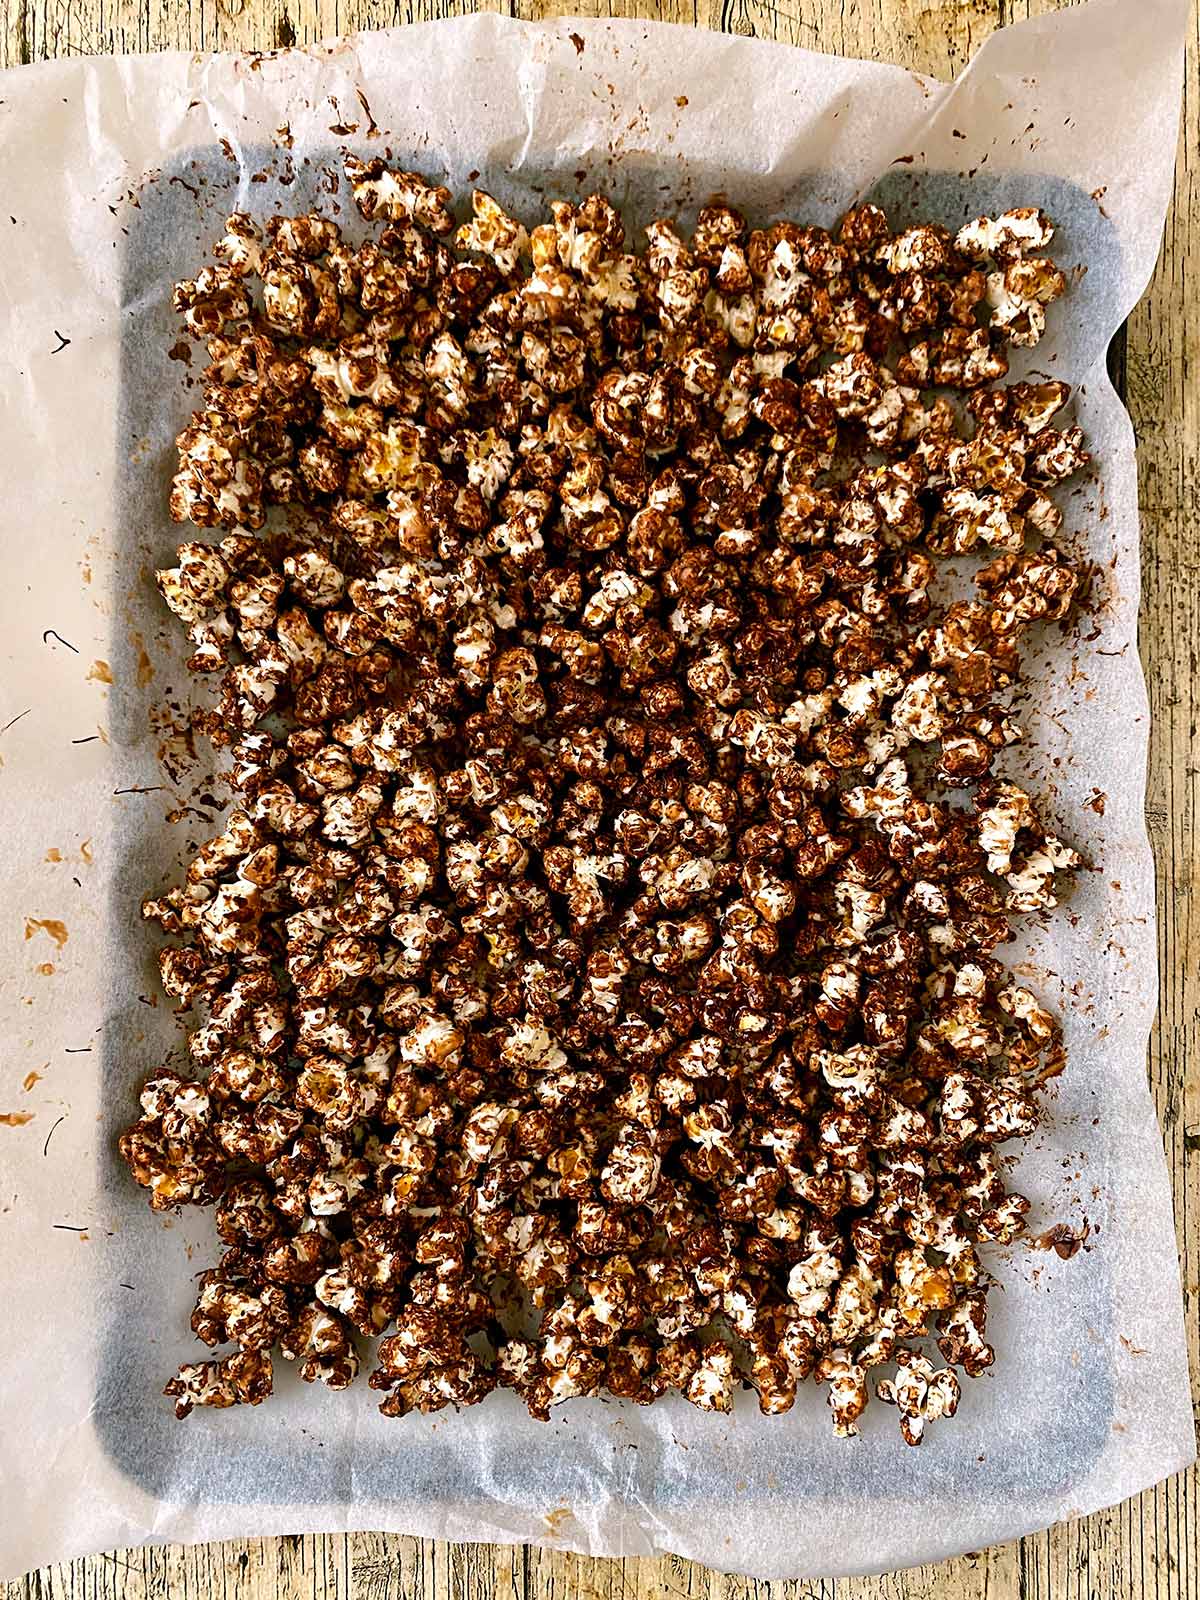 A tray od chocolate coated popcorn.